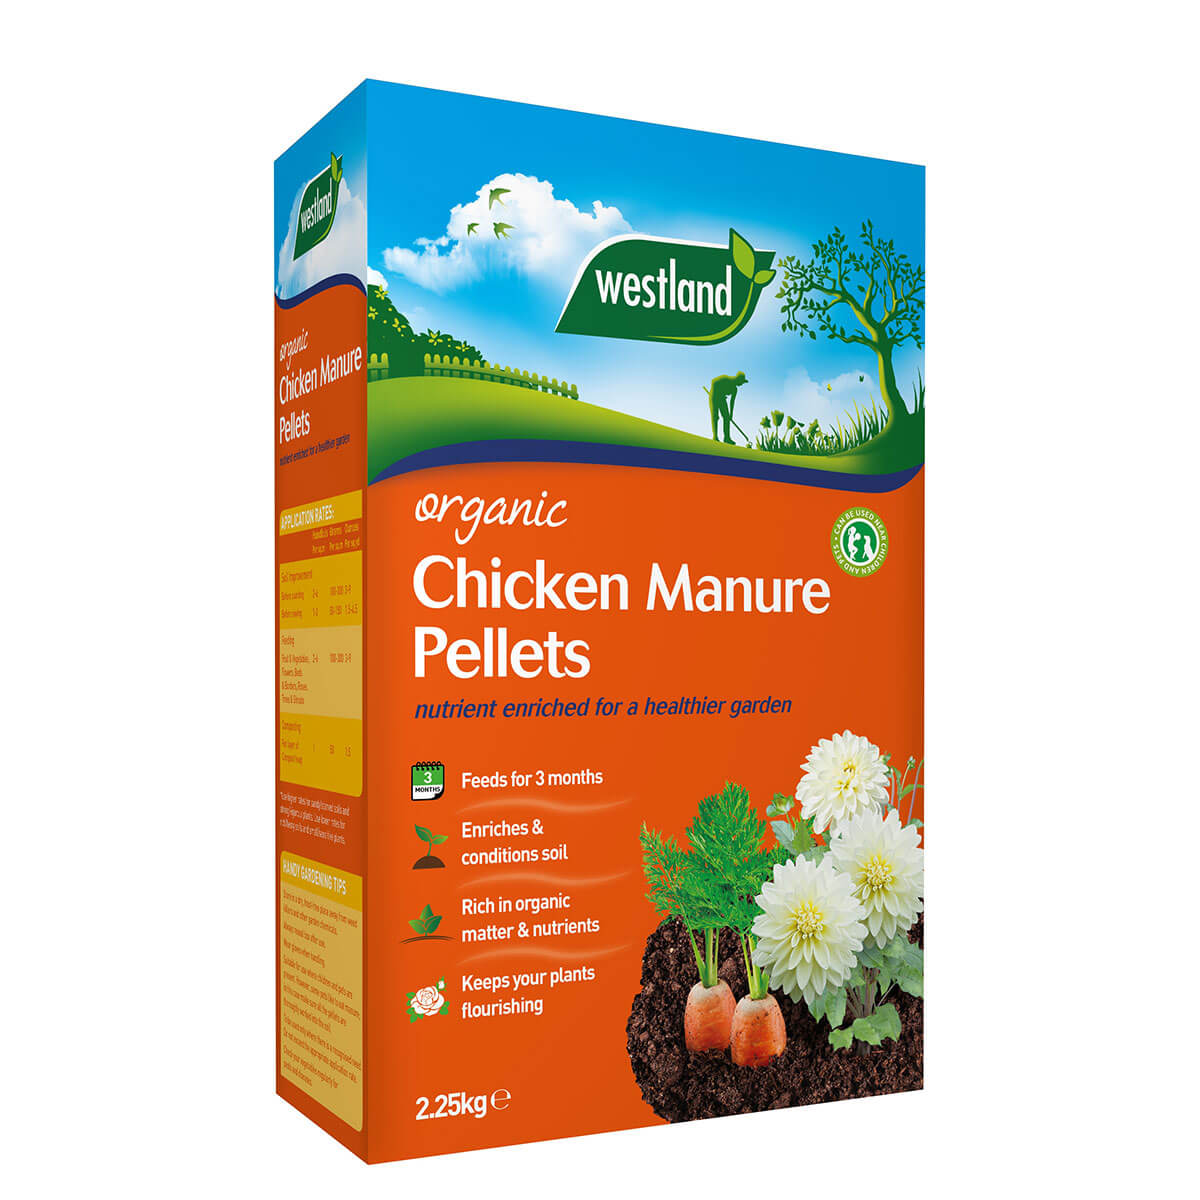 Organic Chicken Manure Pellets (2.25kg)